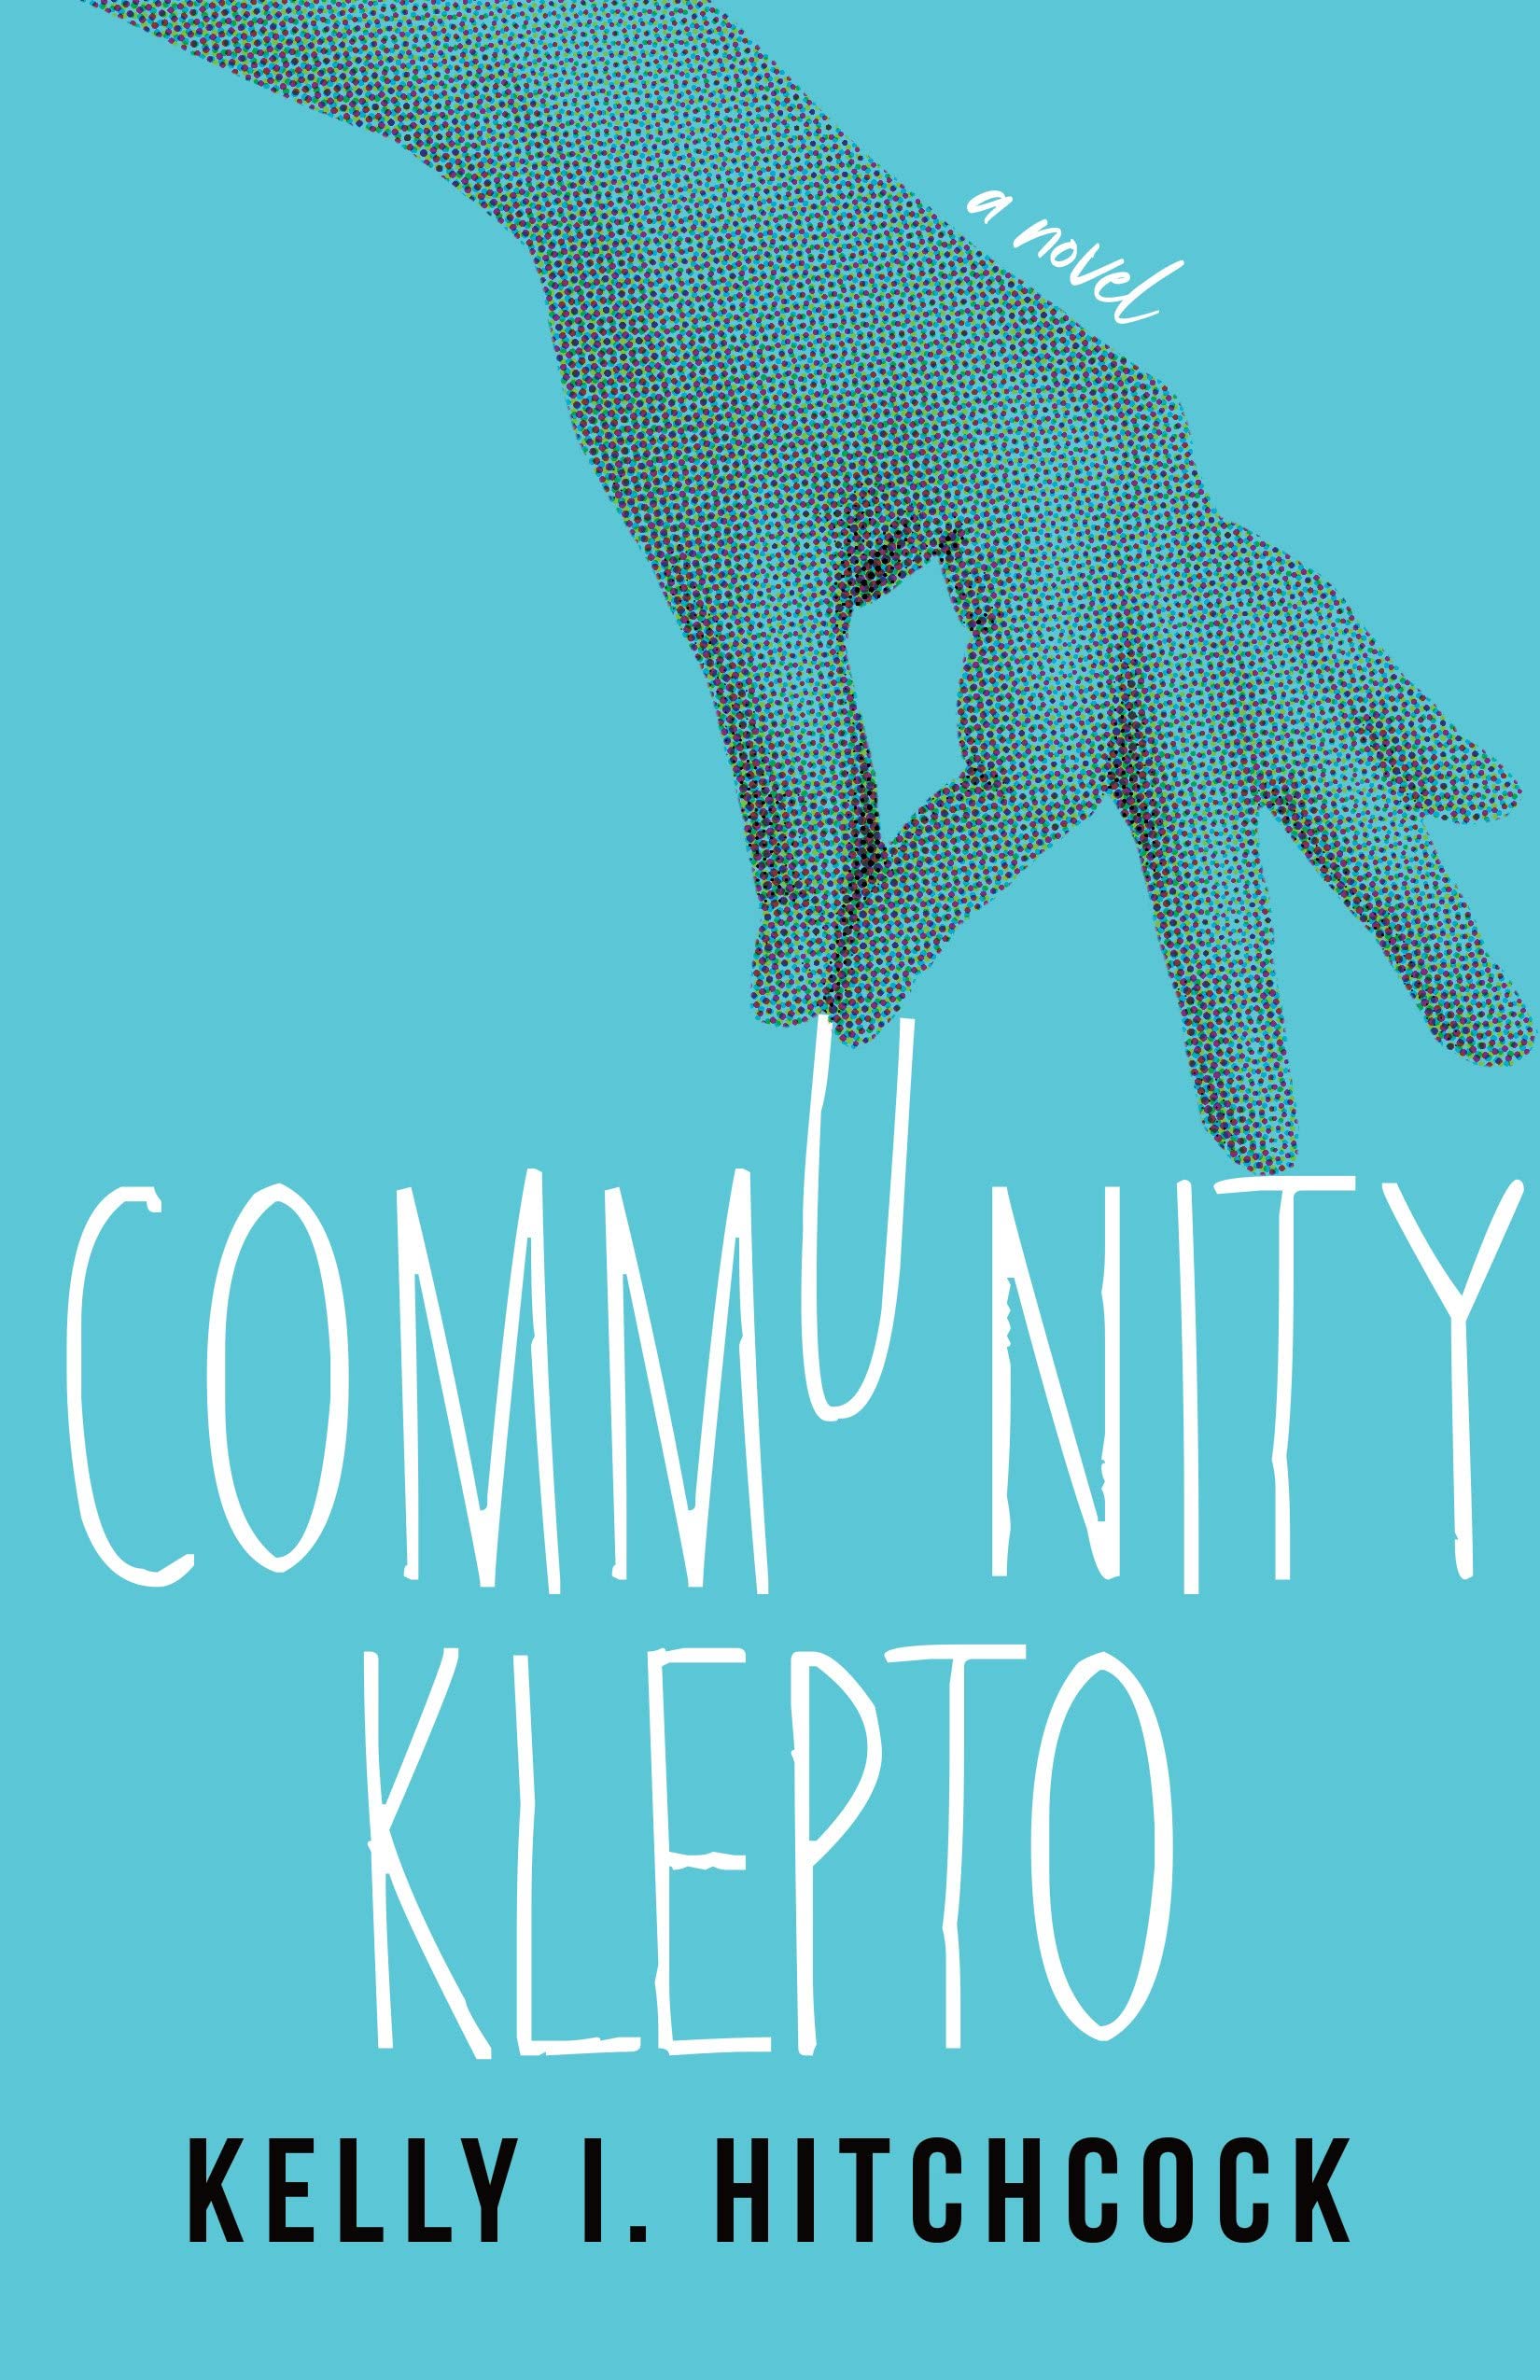 Community Klepto by Kelly L. Hitchcock